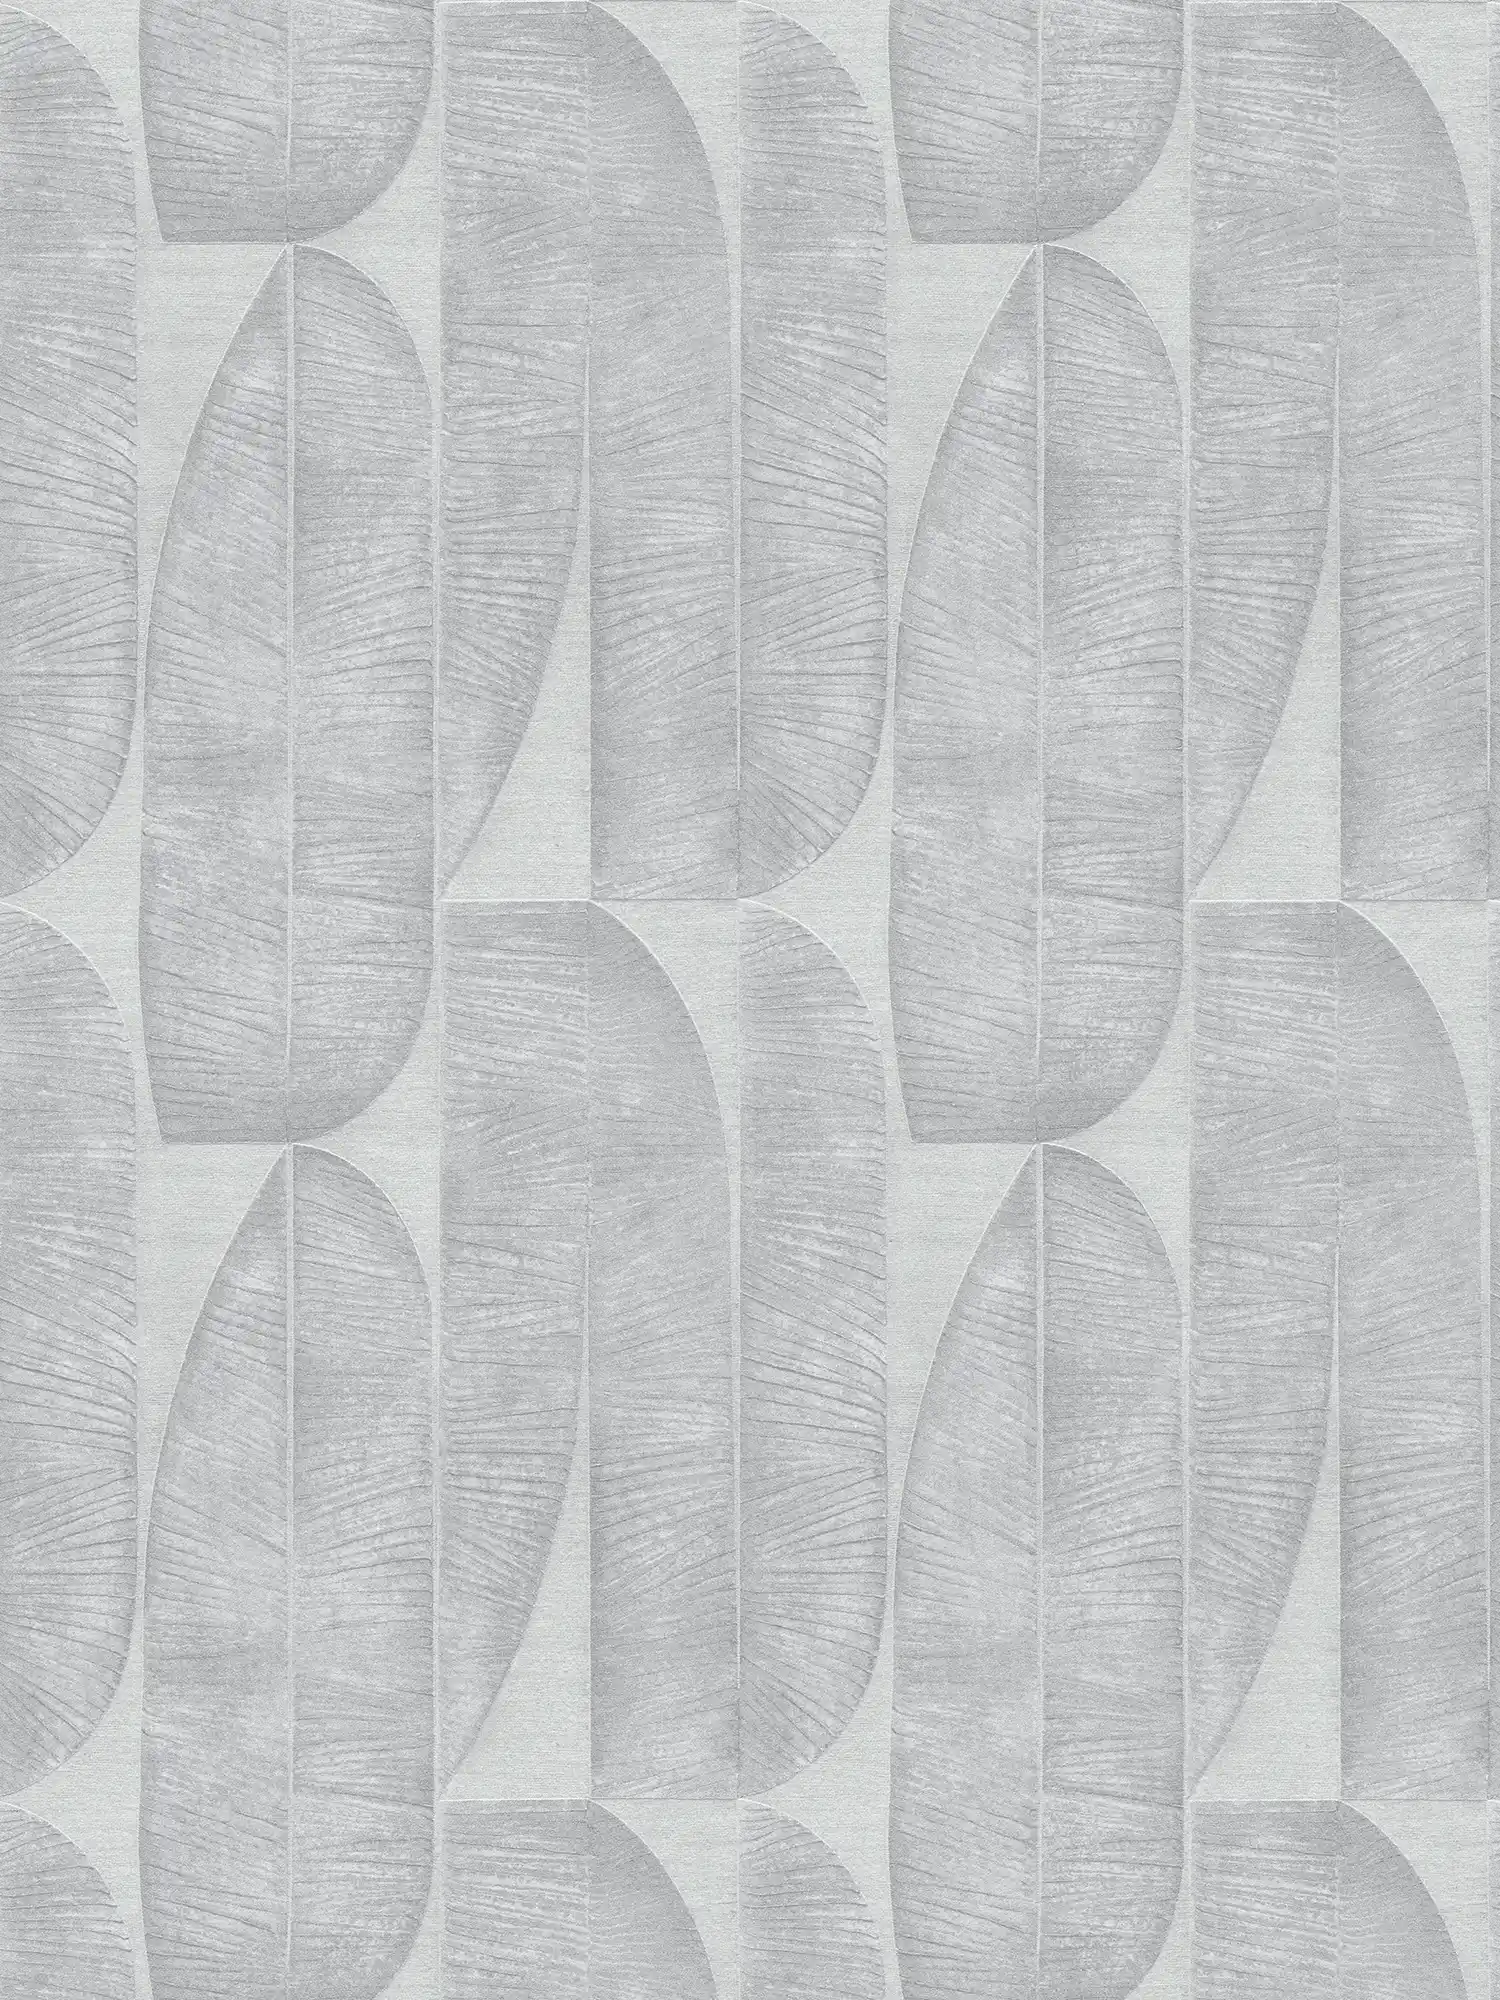 Wallpaper with geometric leaf pattern - grey
